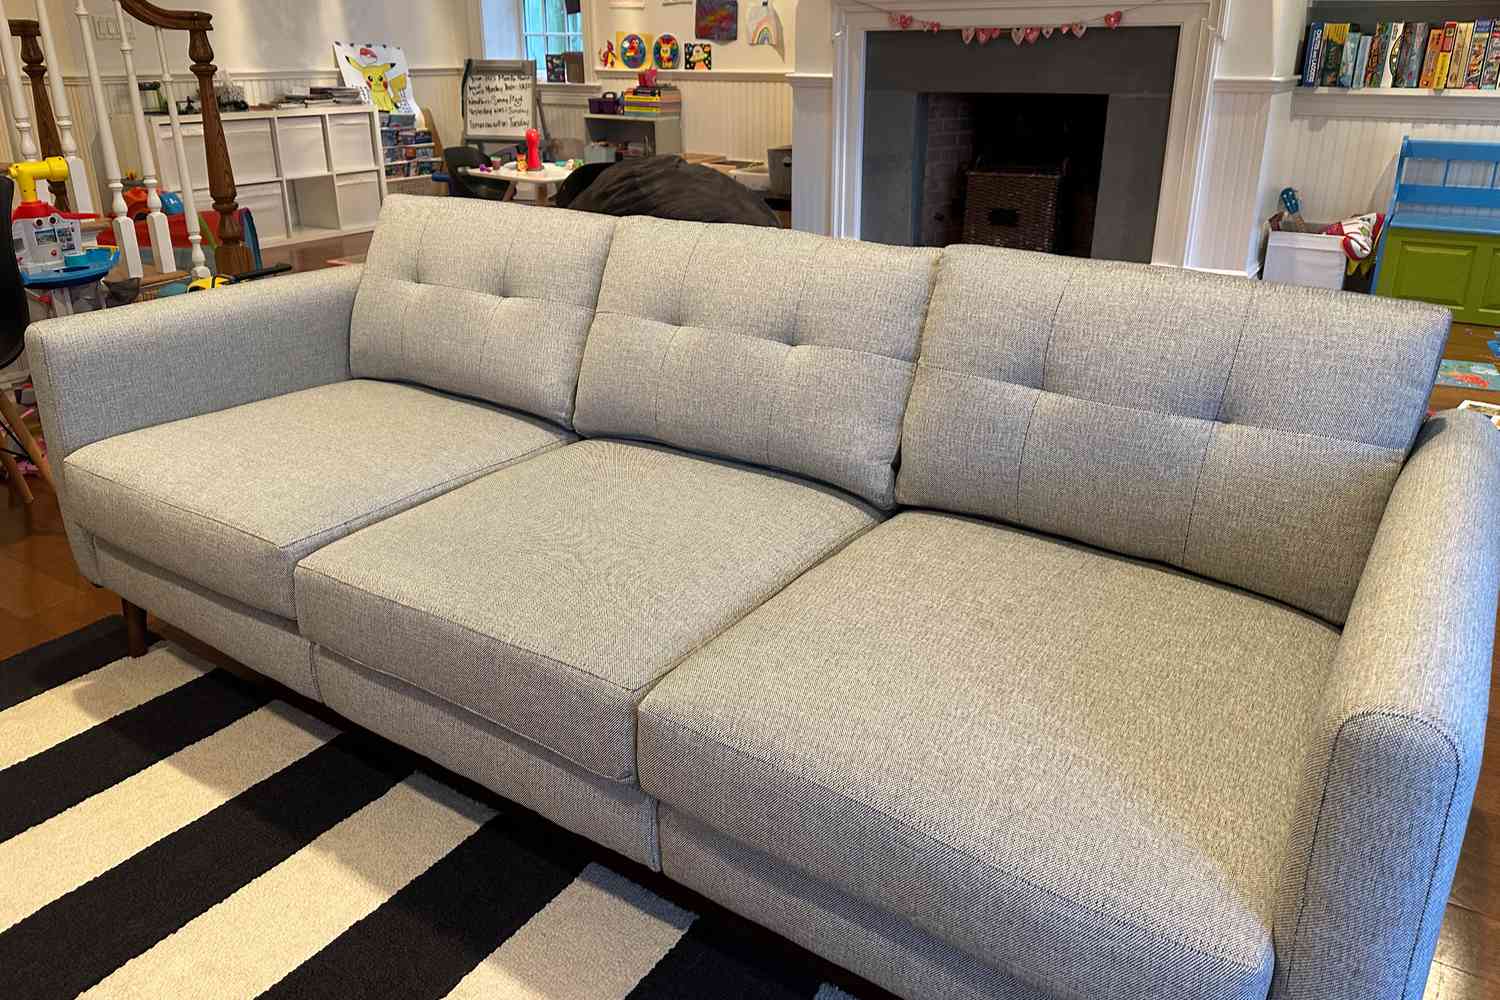 How To Make Hard Sofa More Comfortable